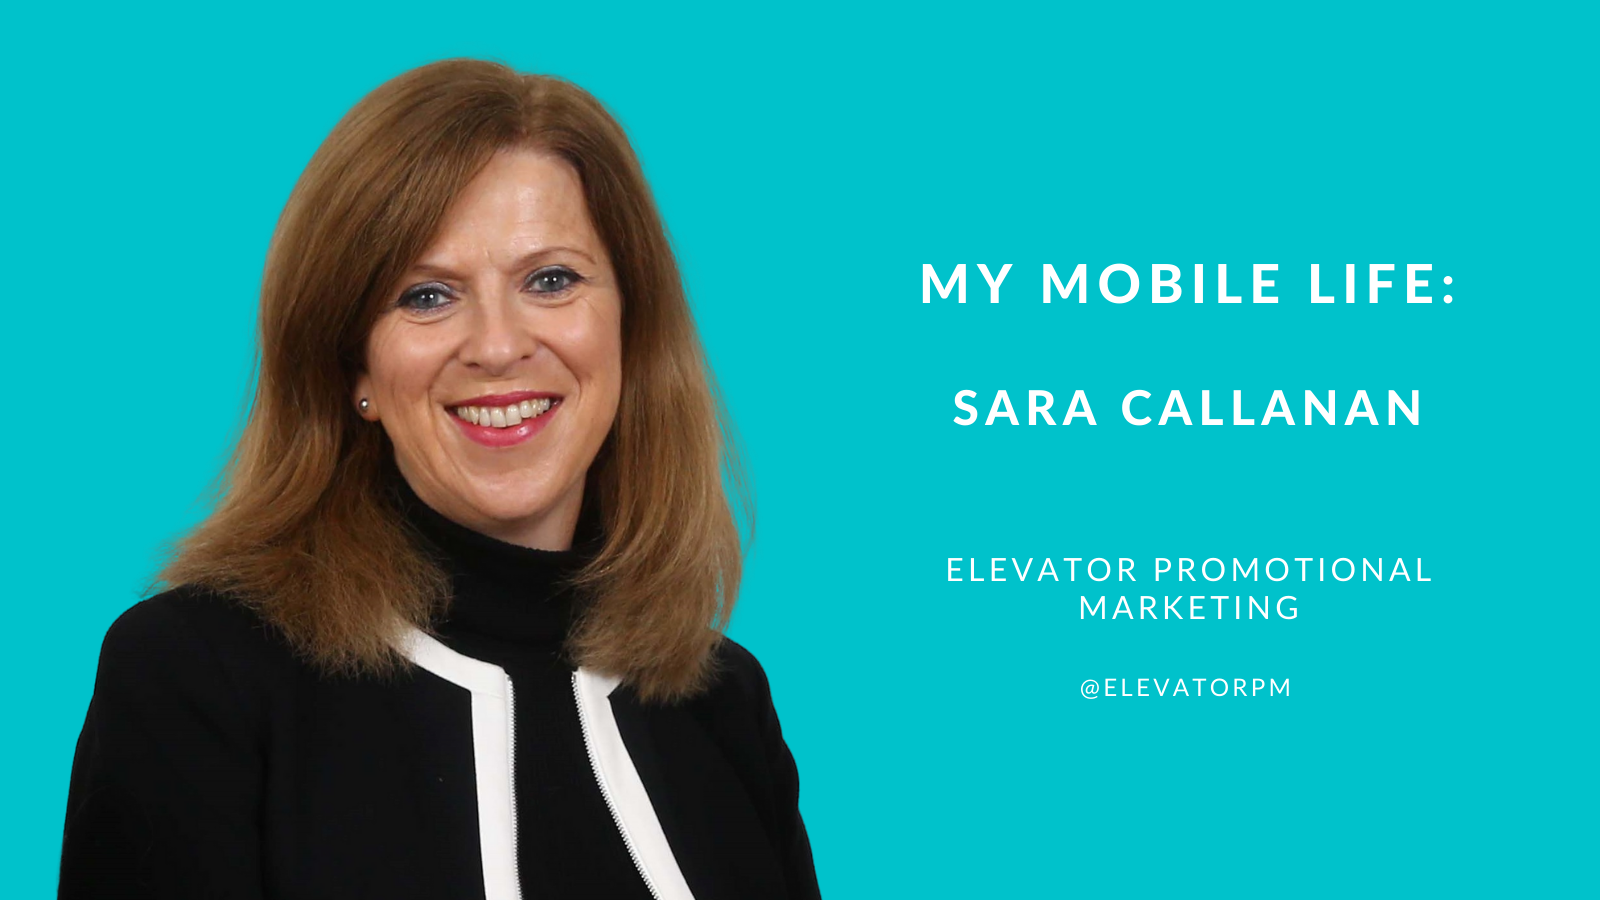 My Mobile Life: Sara Callanan of Elevator Promotional Marketing